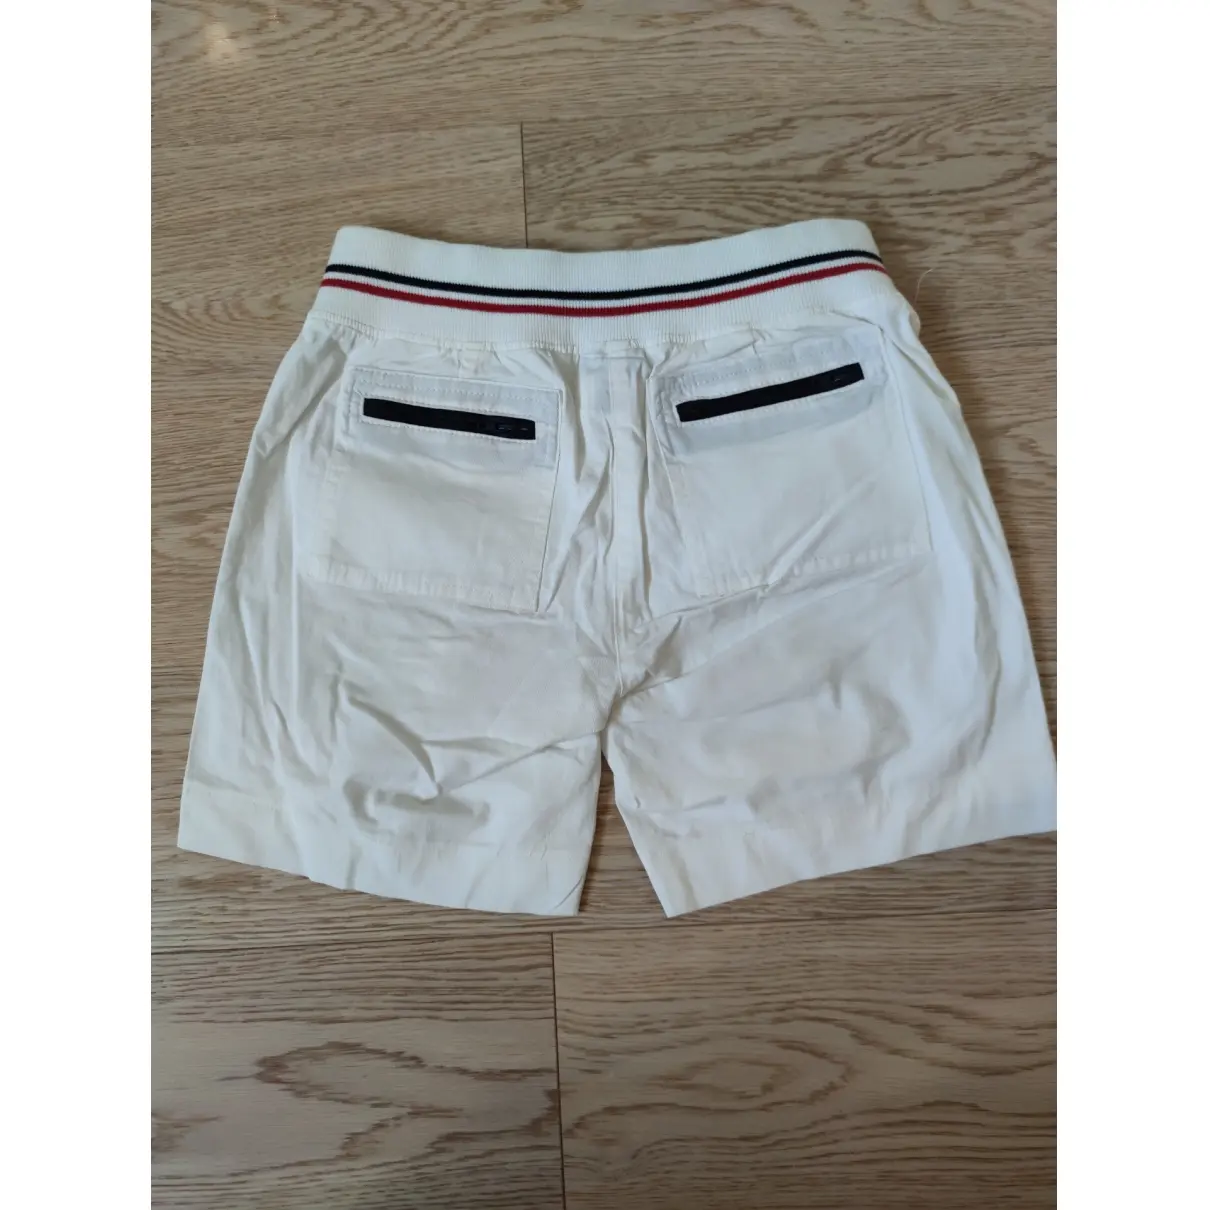 Buy D&G White Cotton Shorts online